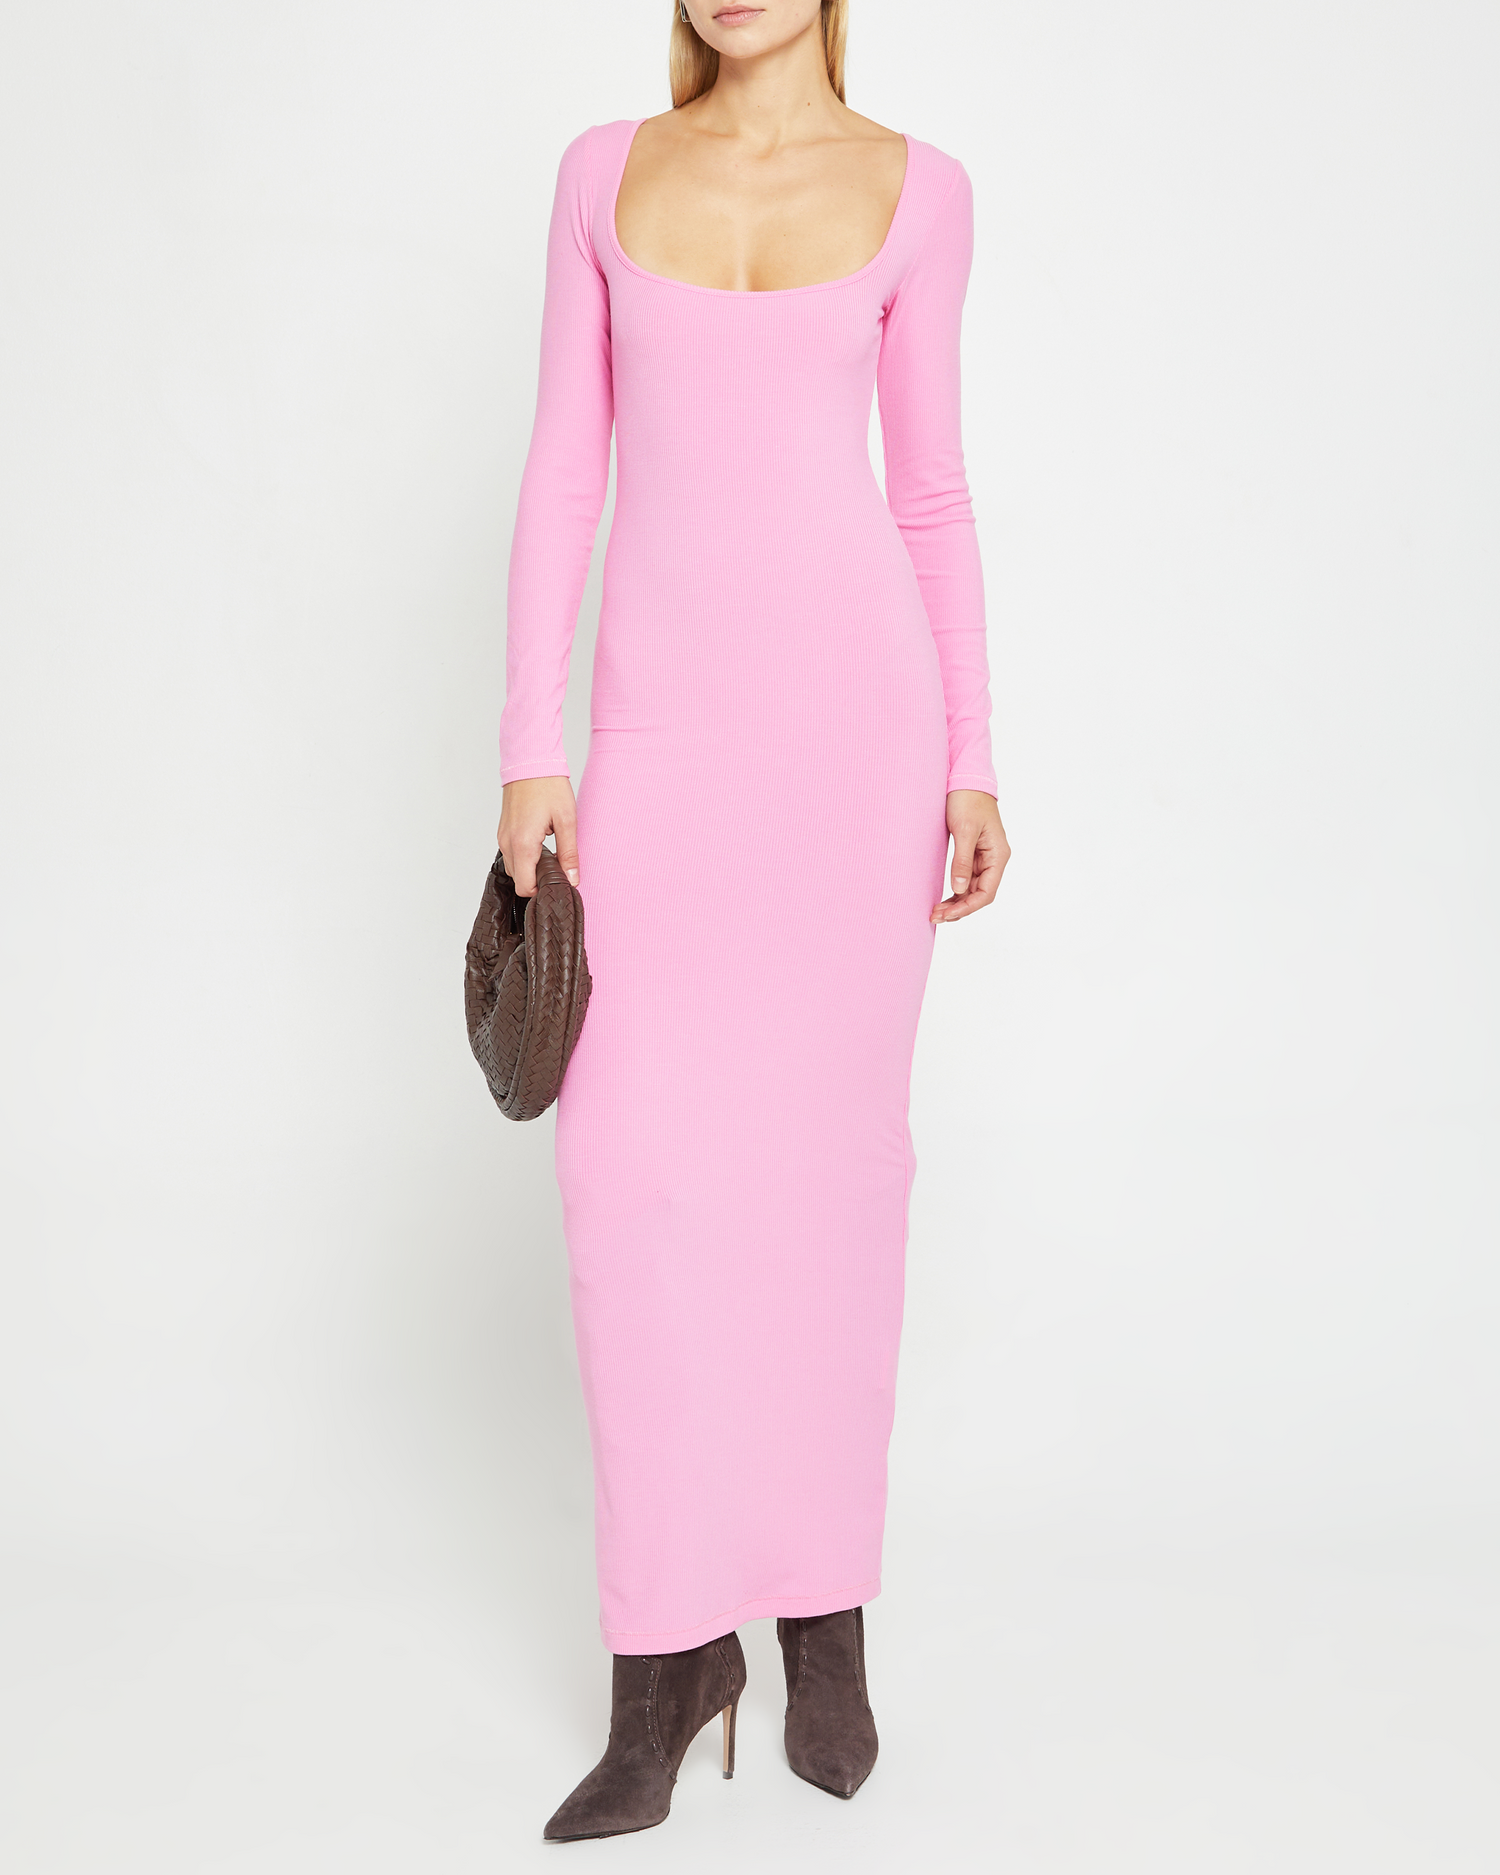 Pink Soft Lounge Maxi Dress by SKIMS on Sale